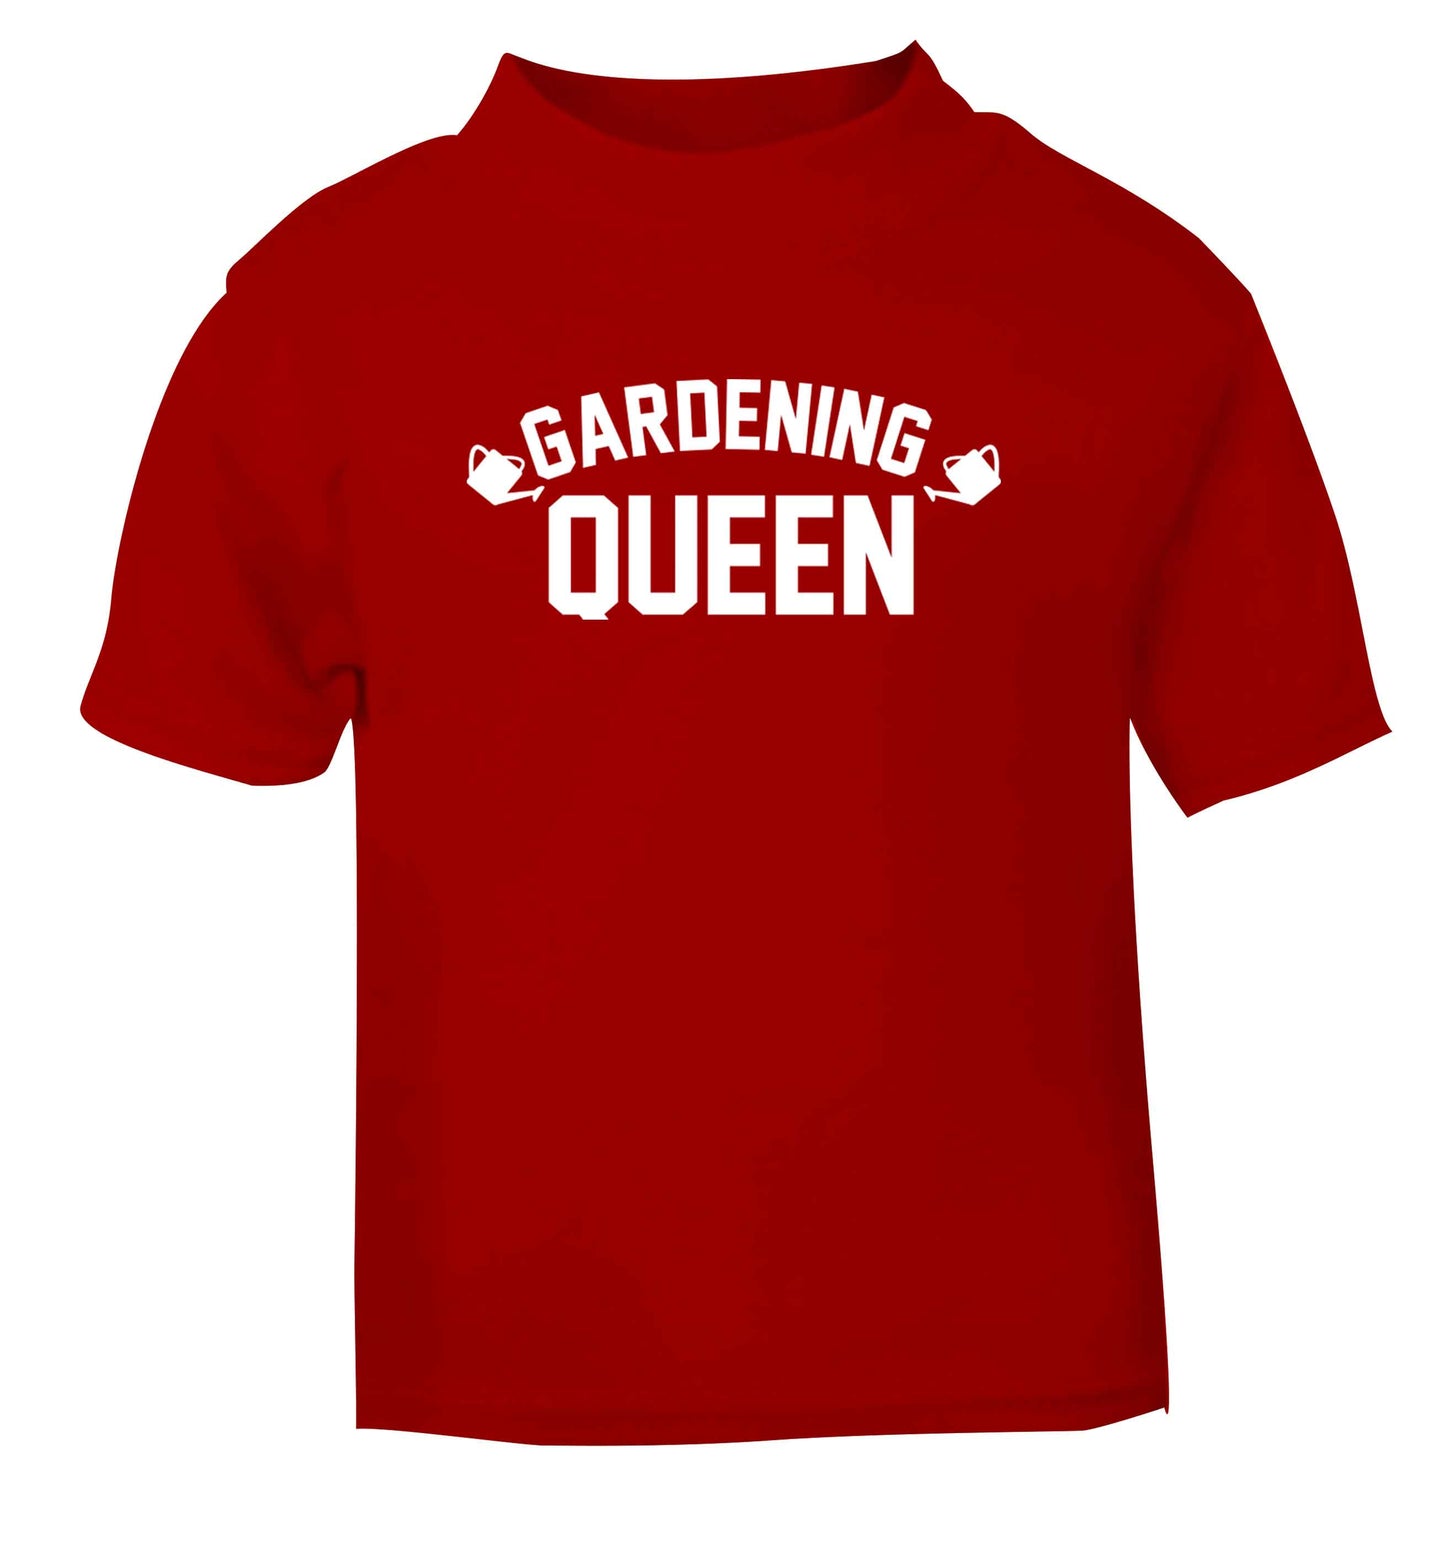 Gardening queen red Baby Toddler Tshirt 2 Years